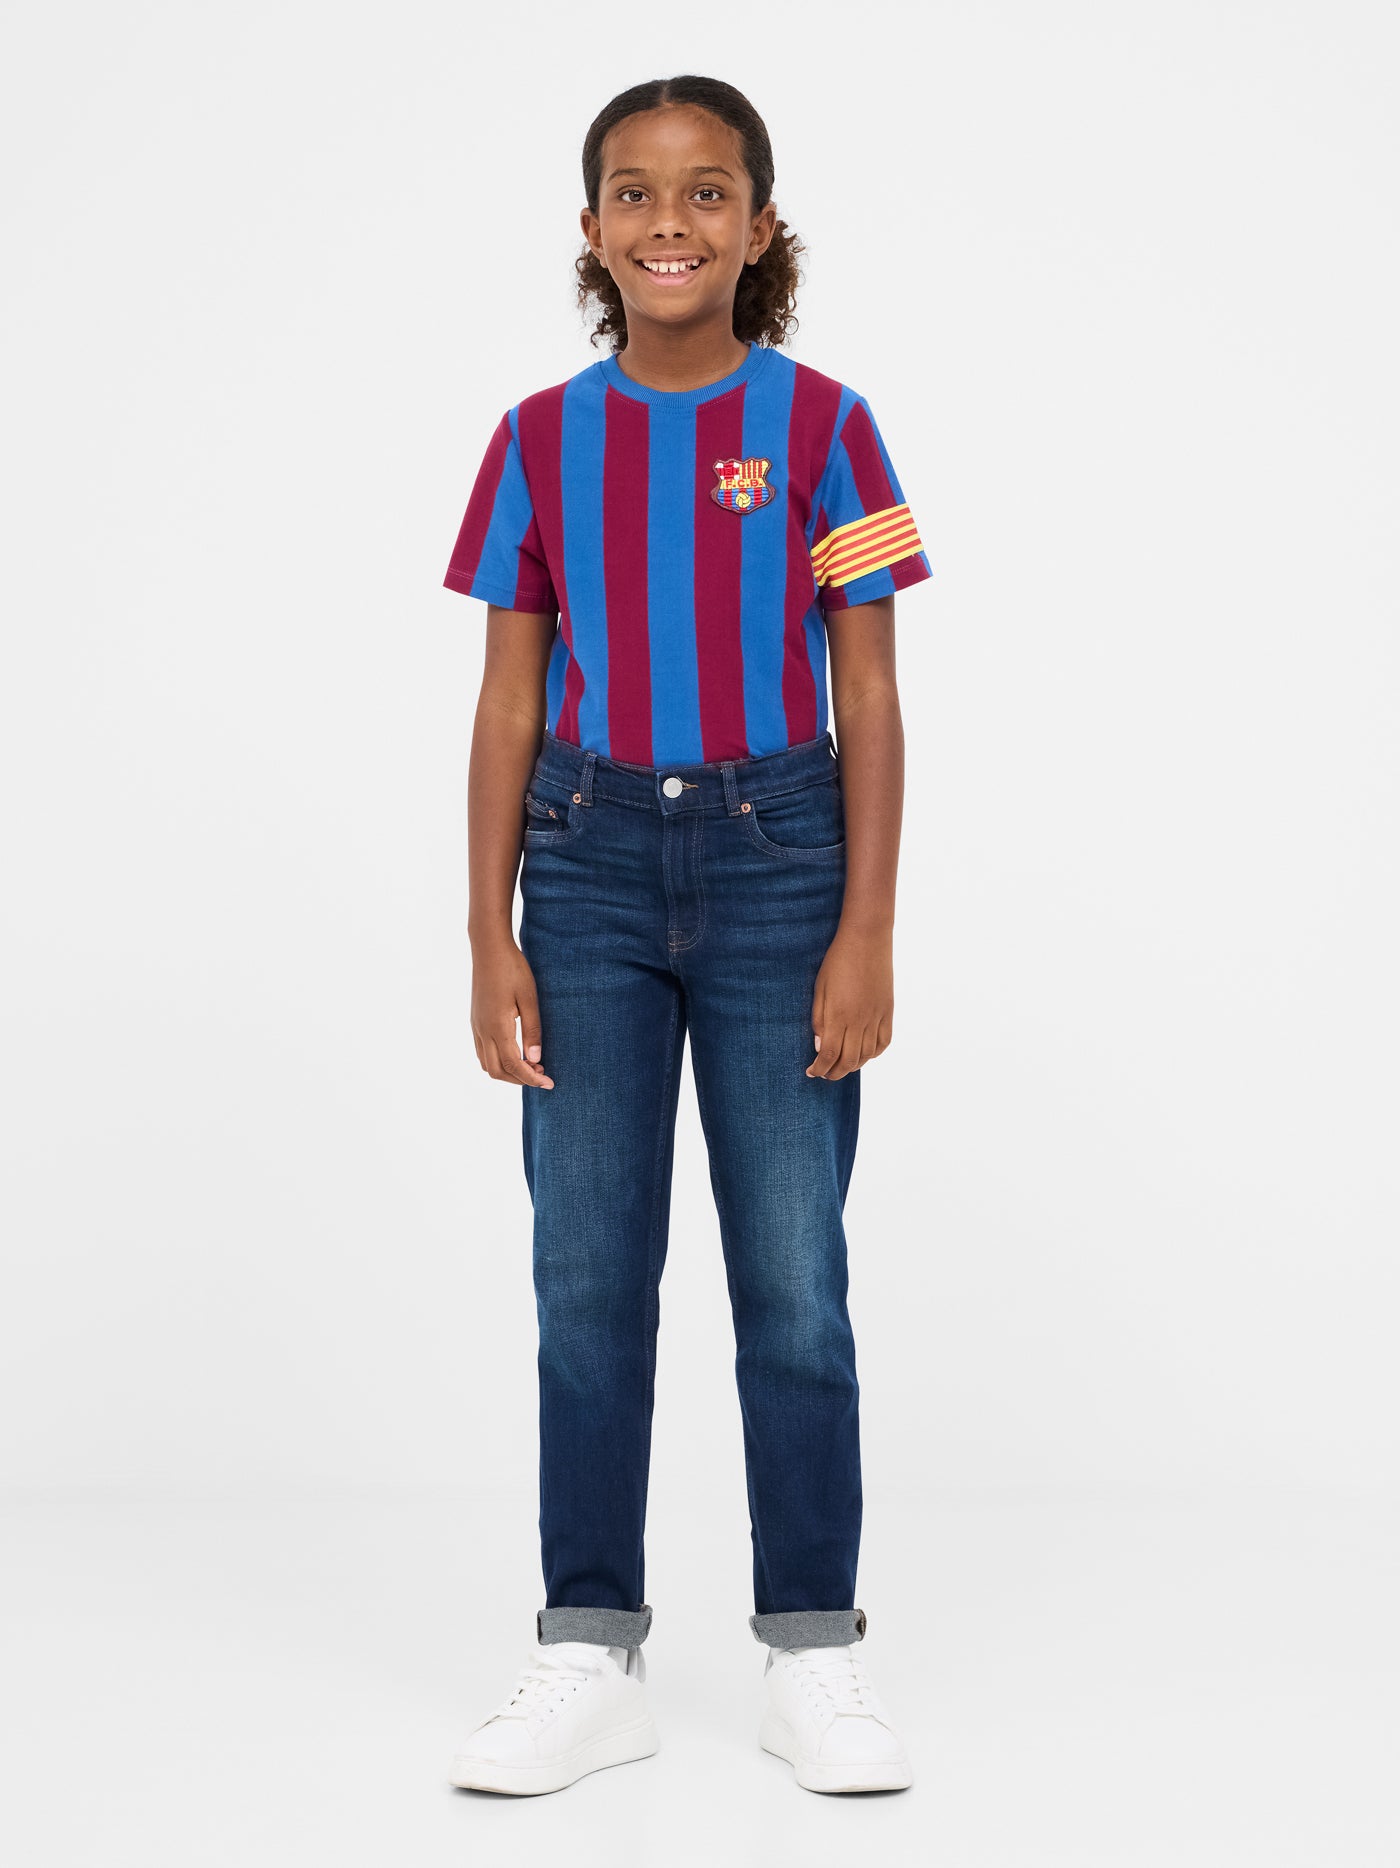 FC Barcelona Captain’s Shirt - Junior